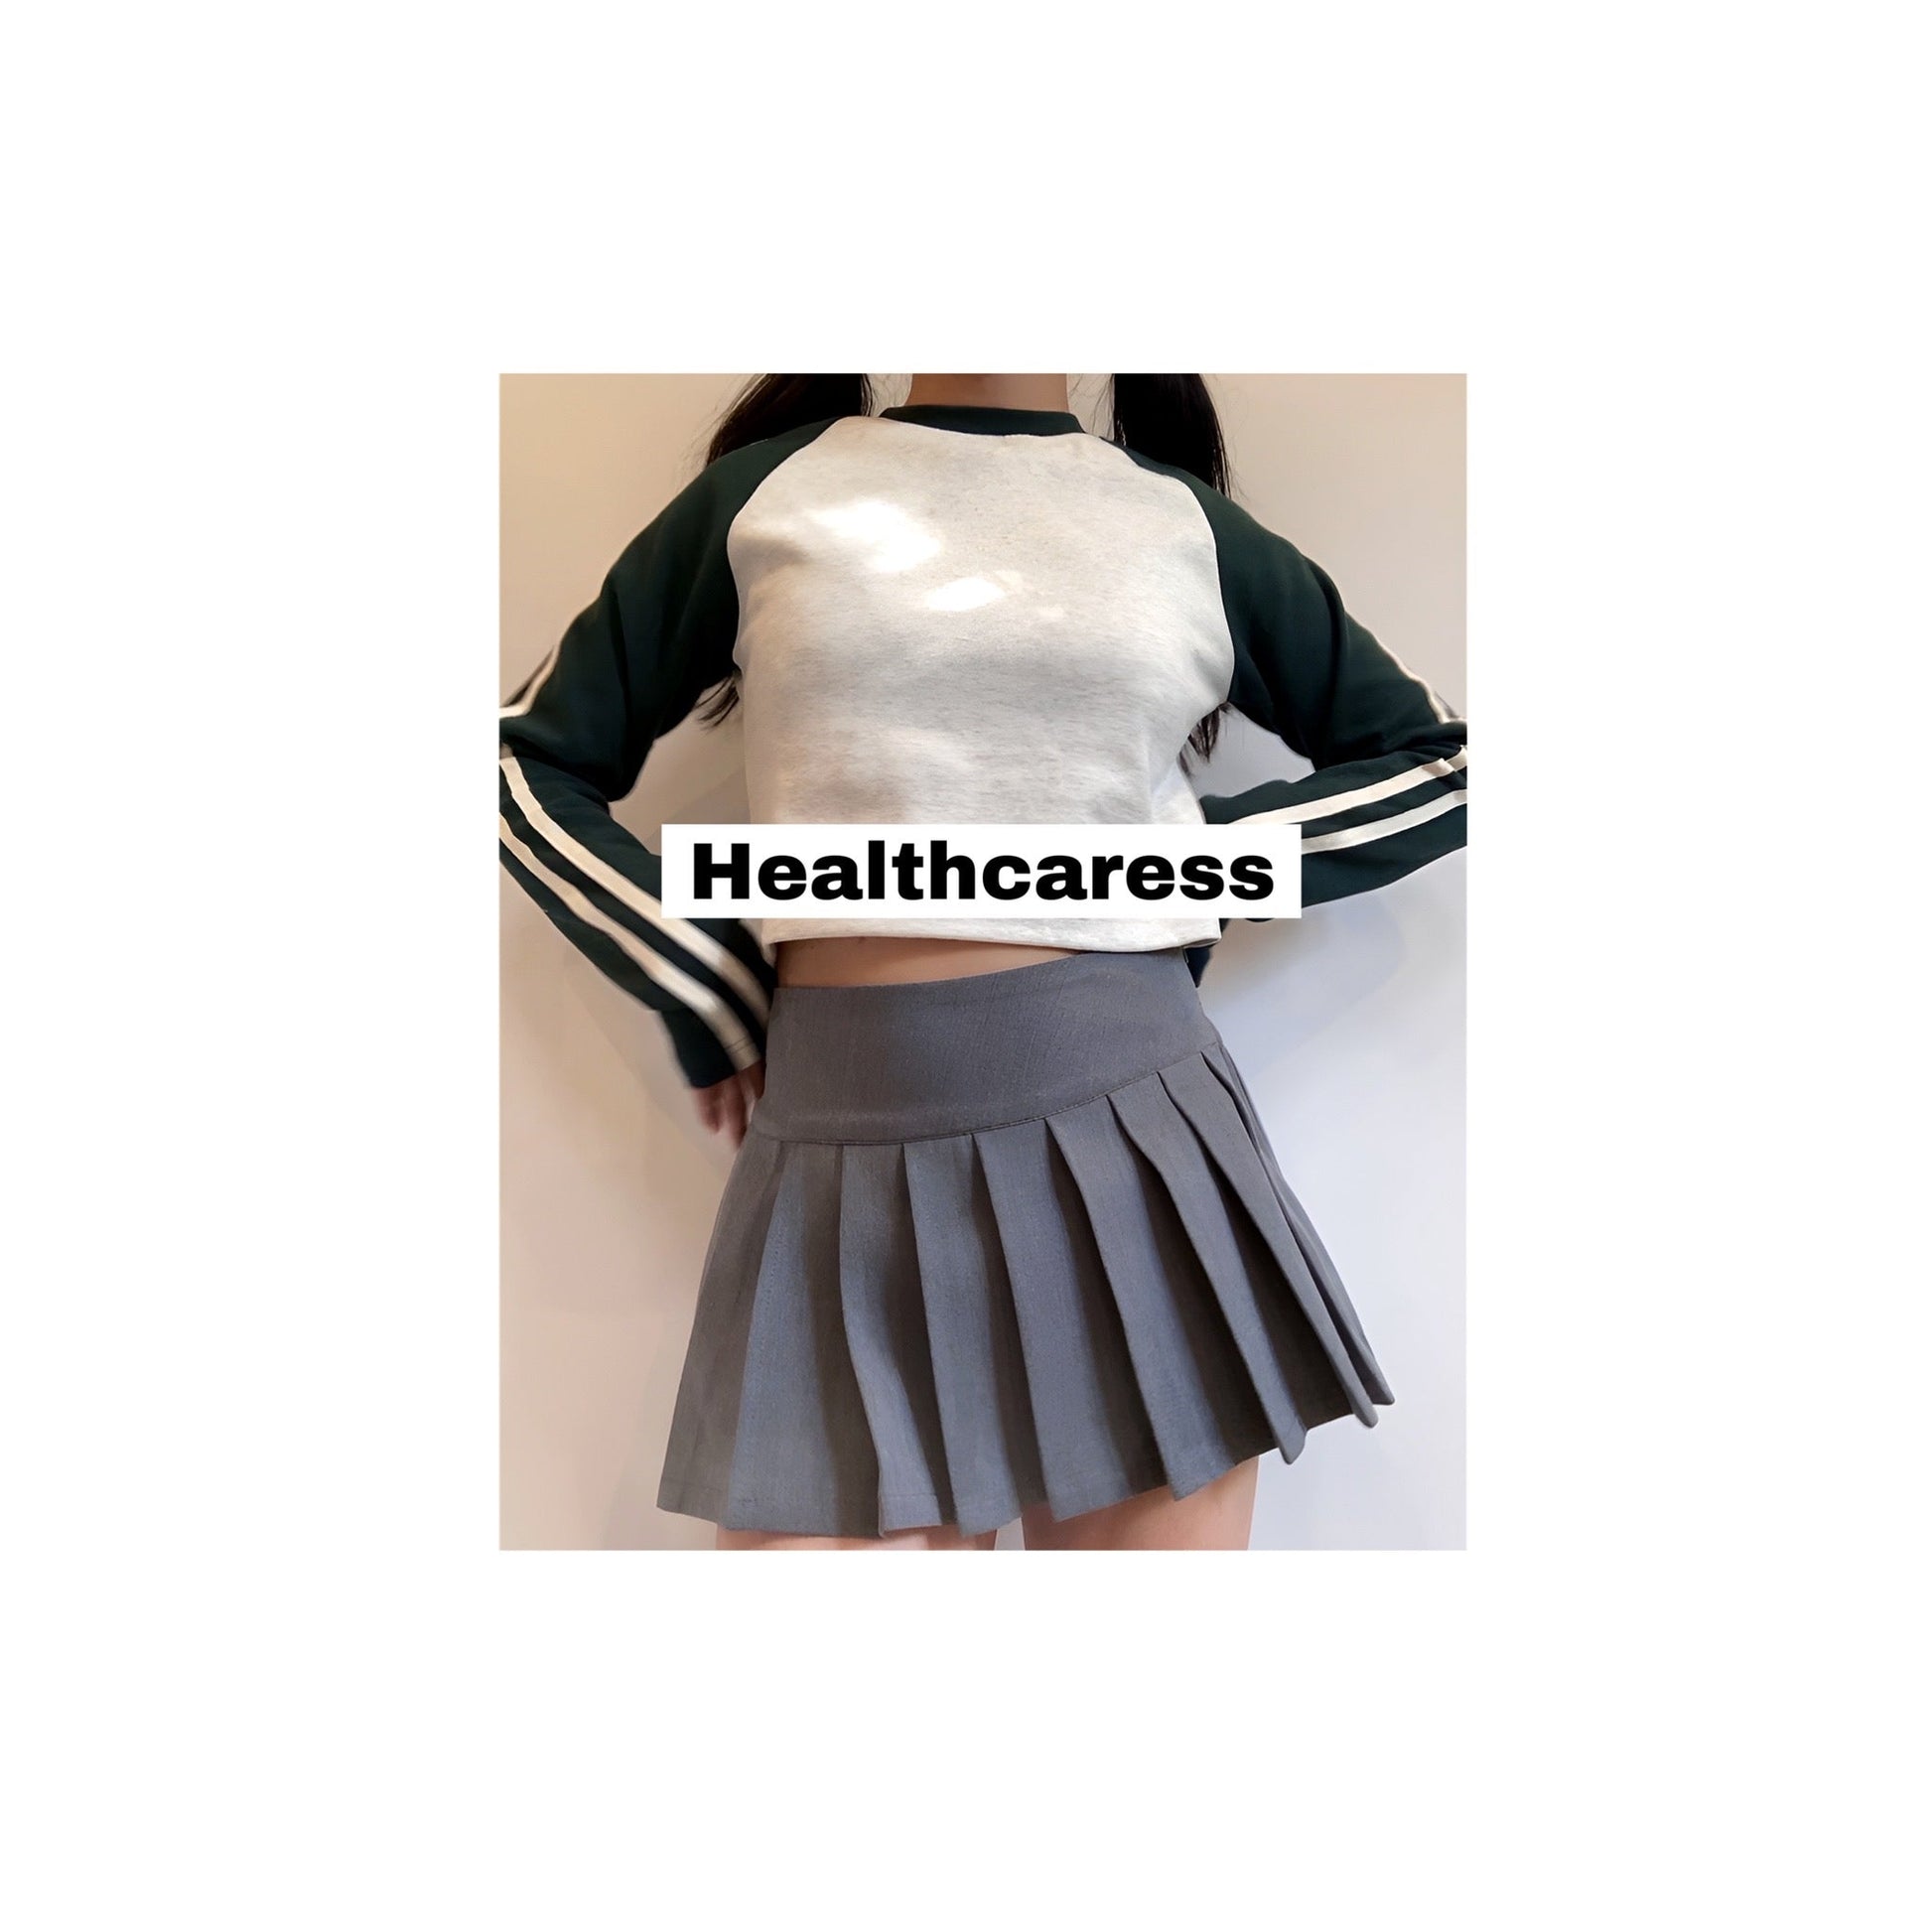 *Healthcaress pleats mini skirt - Healthcaress